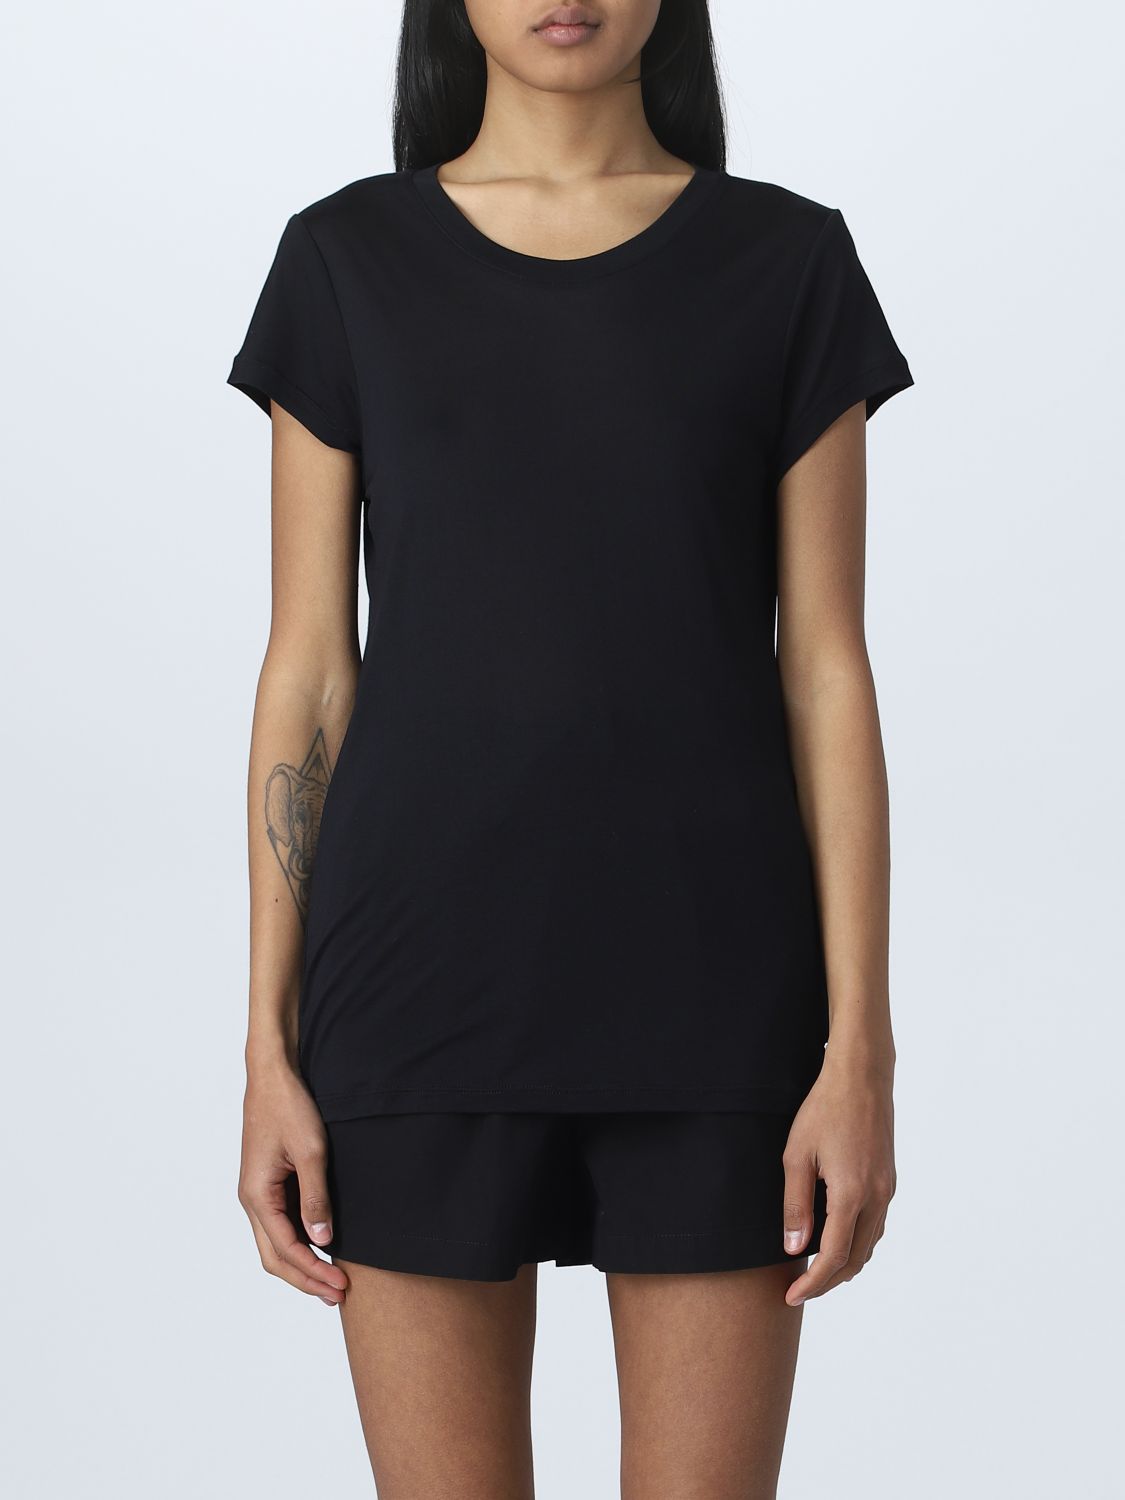 SUN 68: t-shirt for woman - Black | Sun 68 t-shirt T33217 online on ...